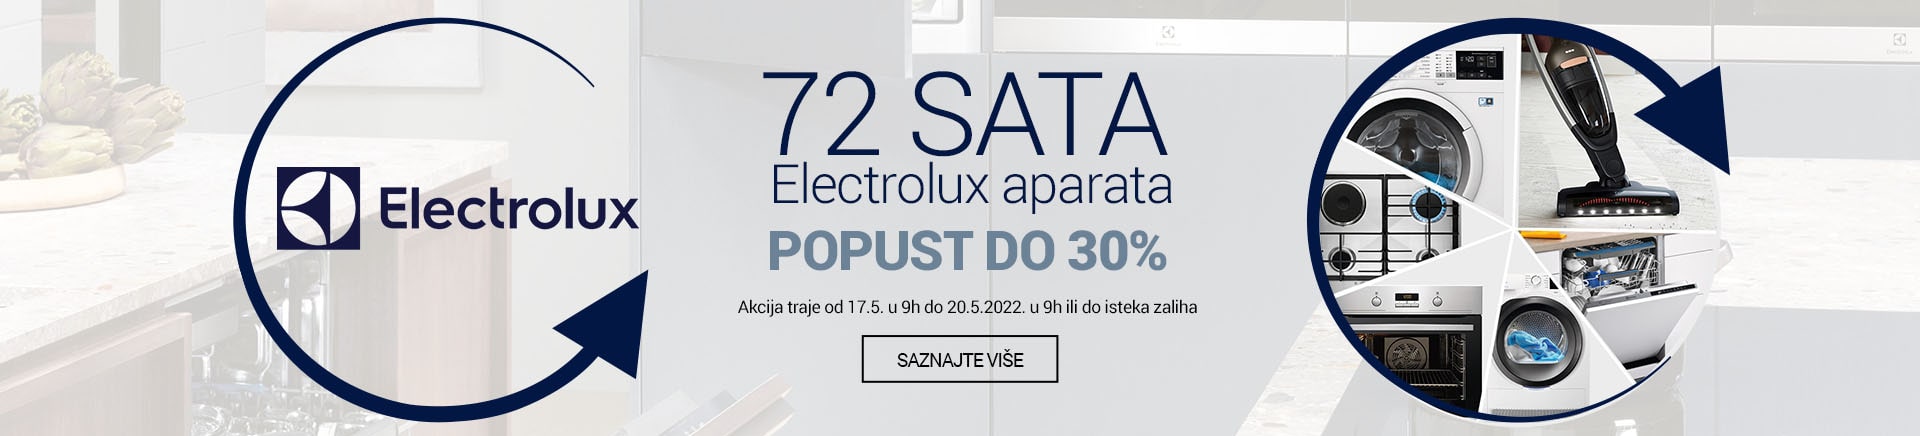 72 sata Electrolux aparat popust do 30%